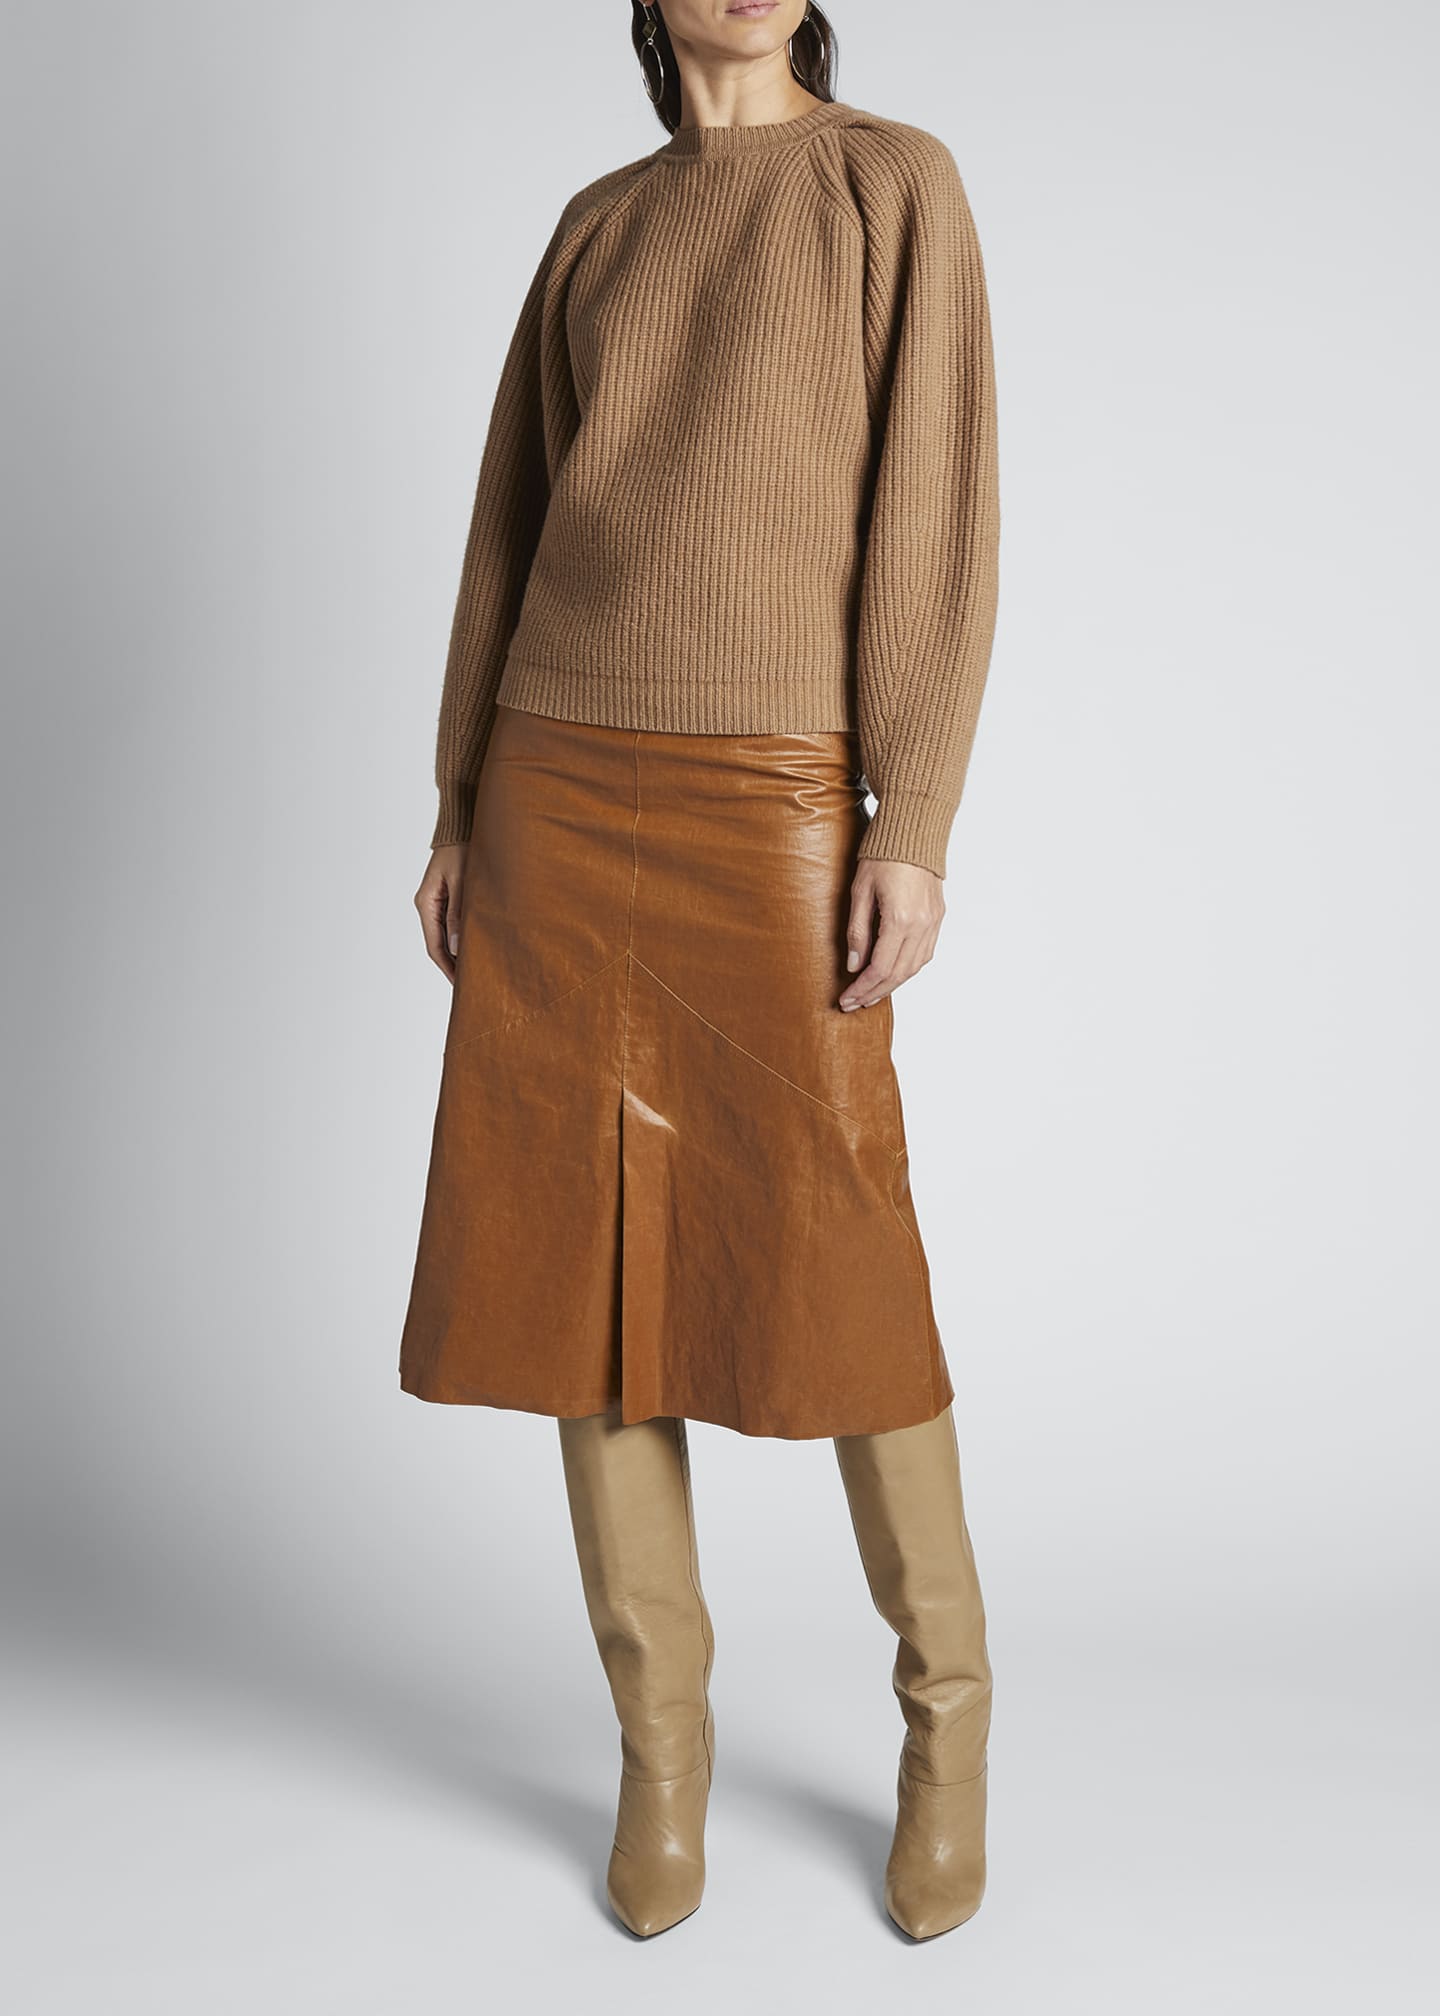 Isabel Marant Wool-Cashmere Crewneck Sweater - Bergdorf Goodman